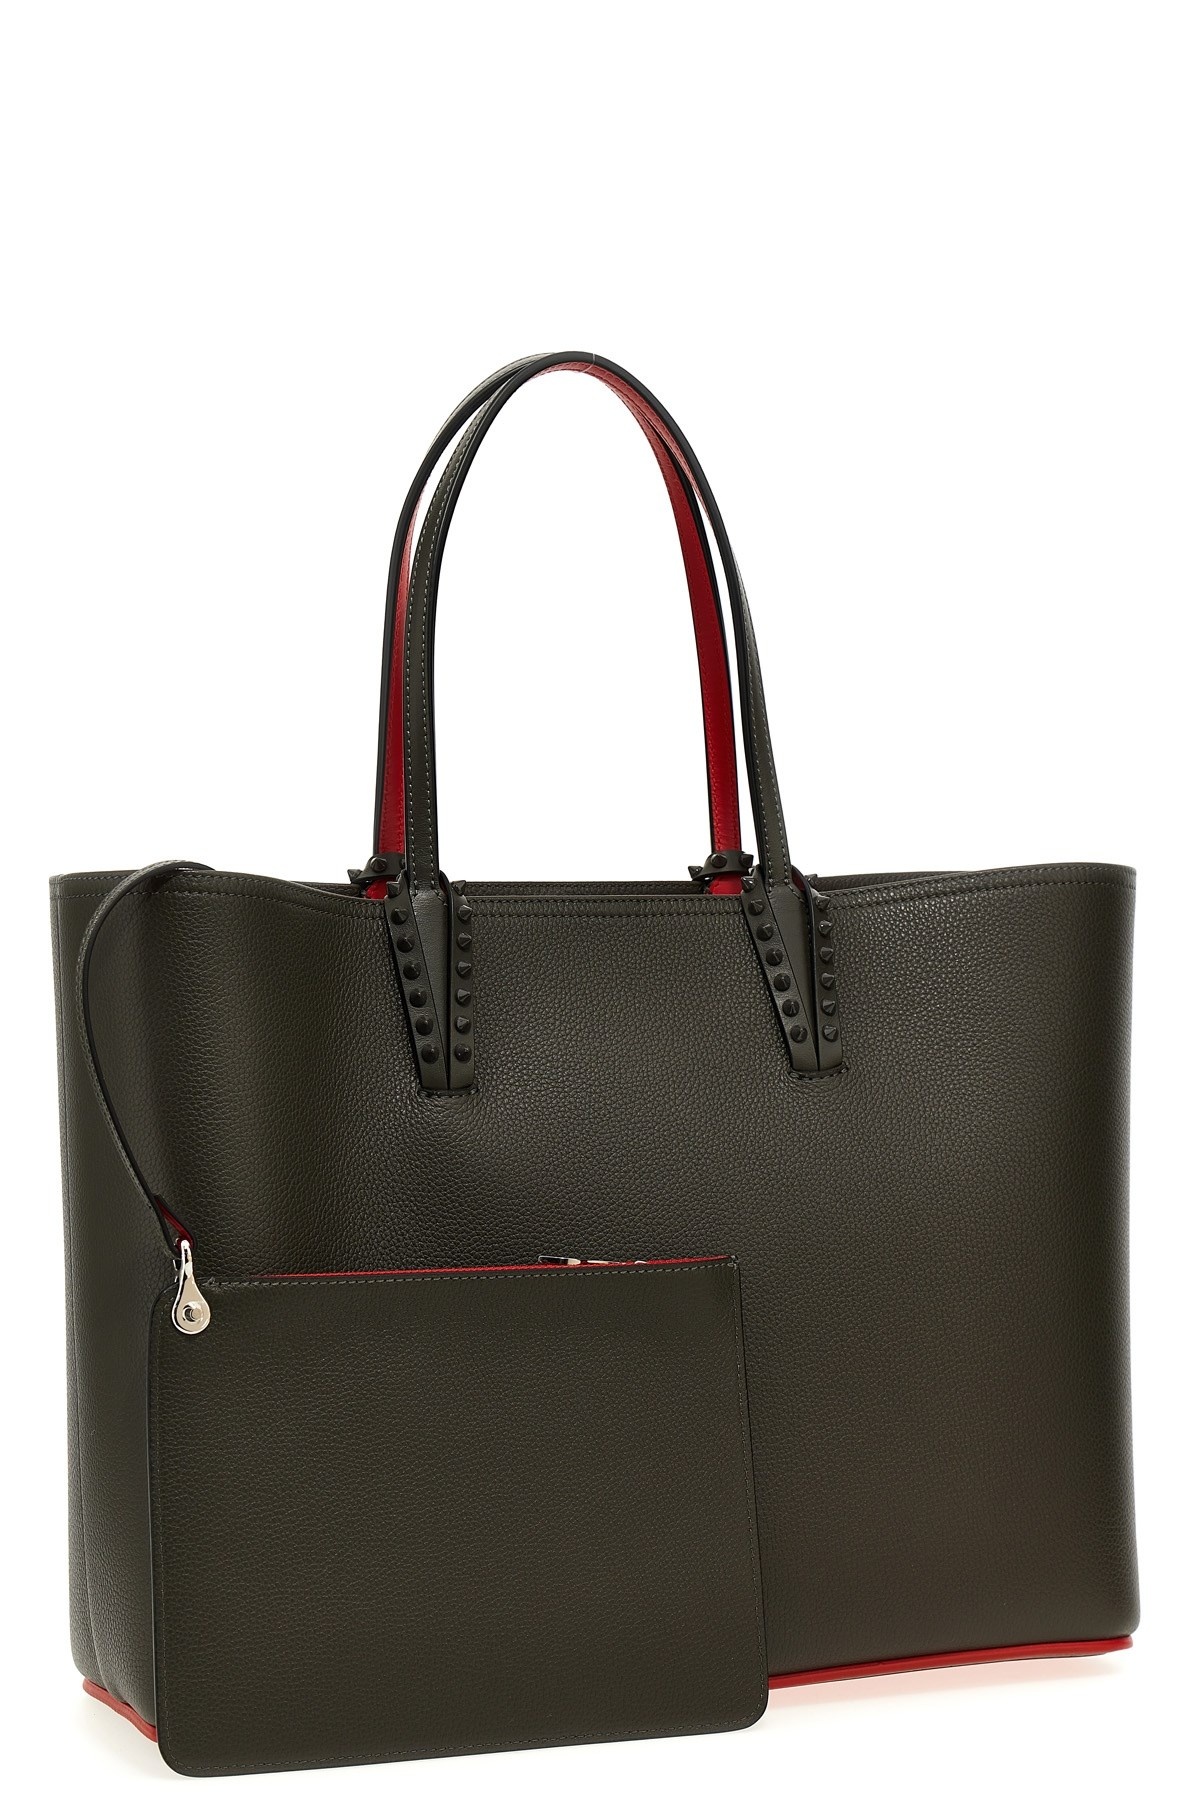 Christian Louboutin 'Cabata' shopping bag | REVERSIBLE